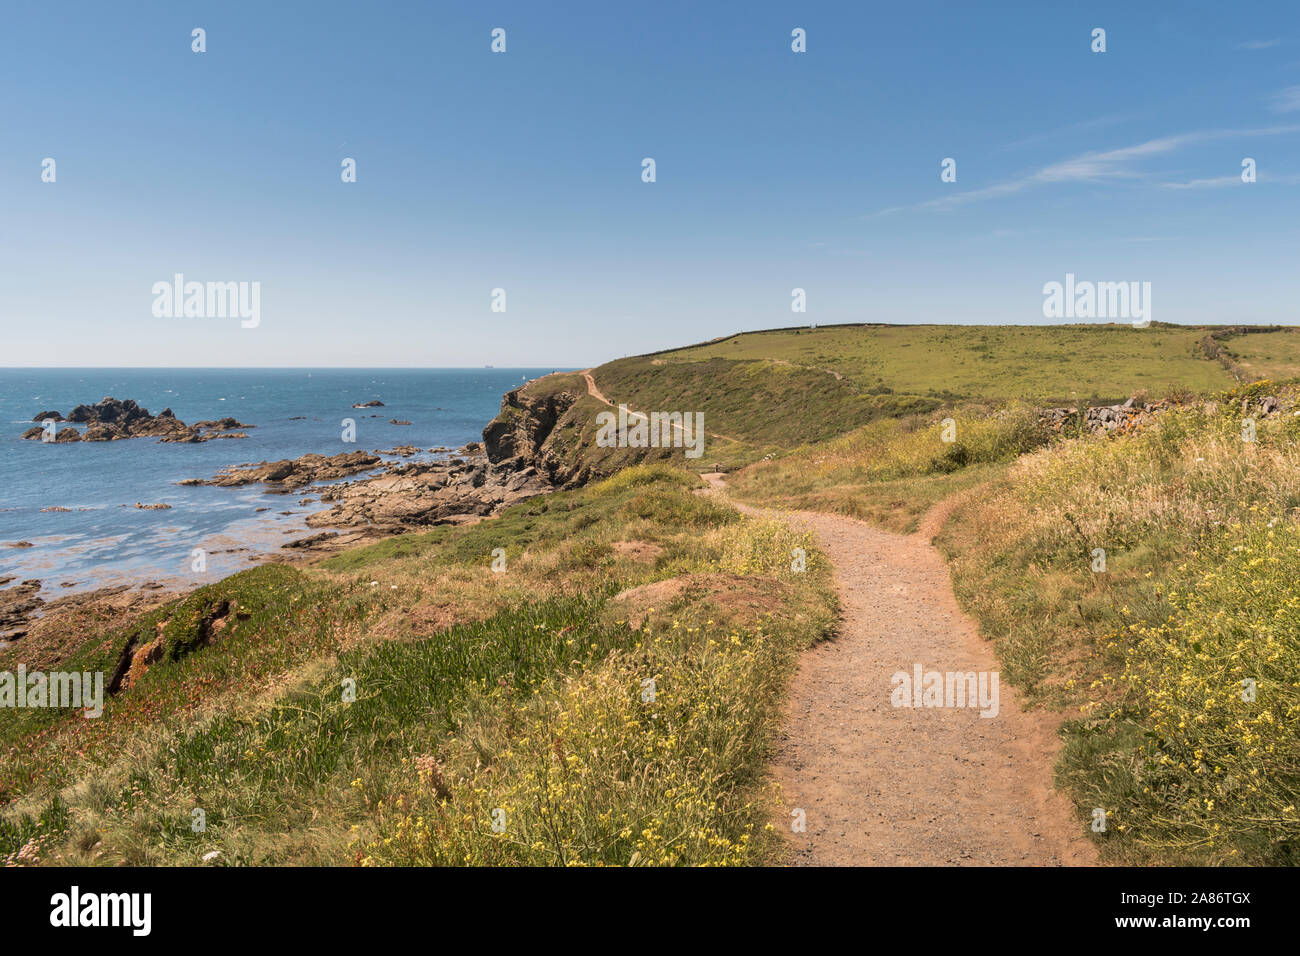 Sentiero costiero a piedi su la lucertola, Cornwall, Inghilterra del punto piu' meridionale. Foto Stock